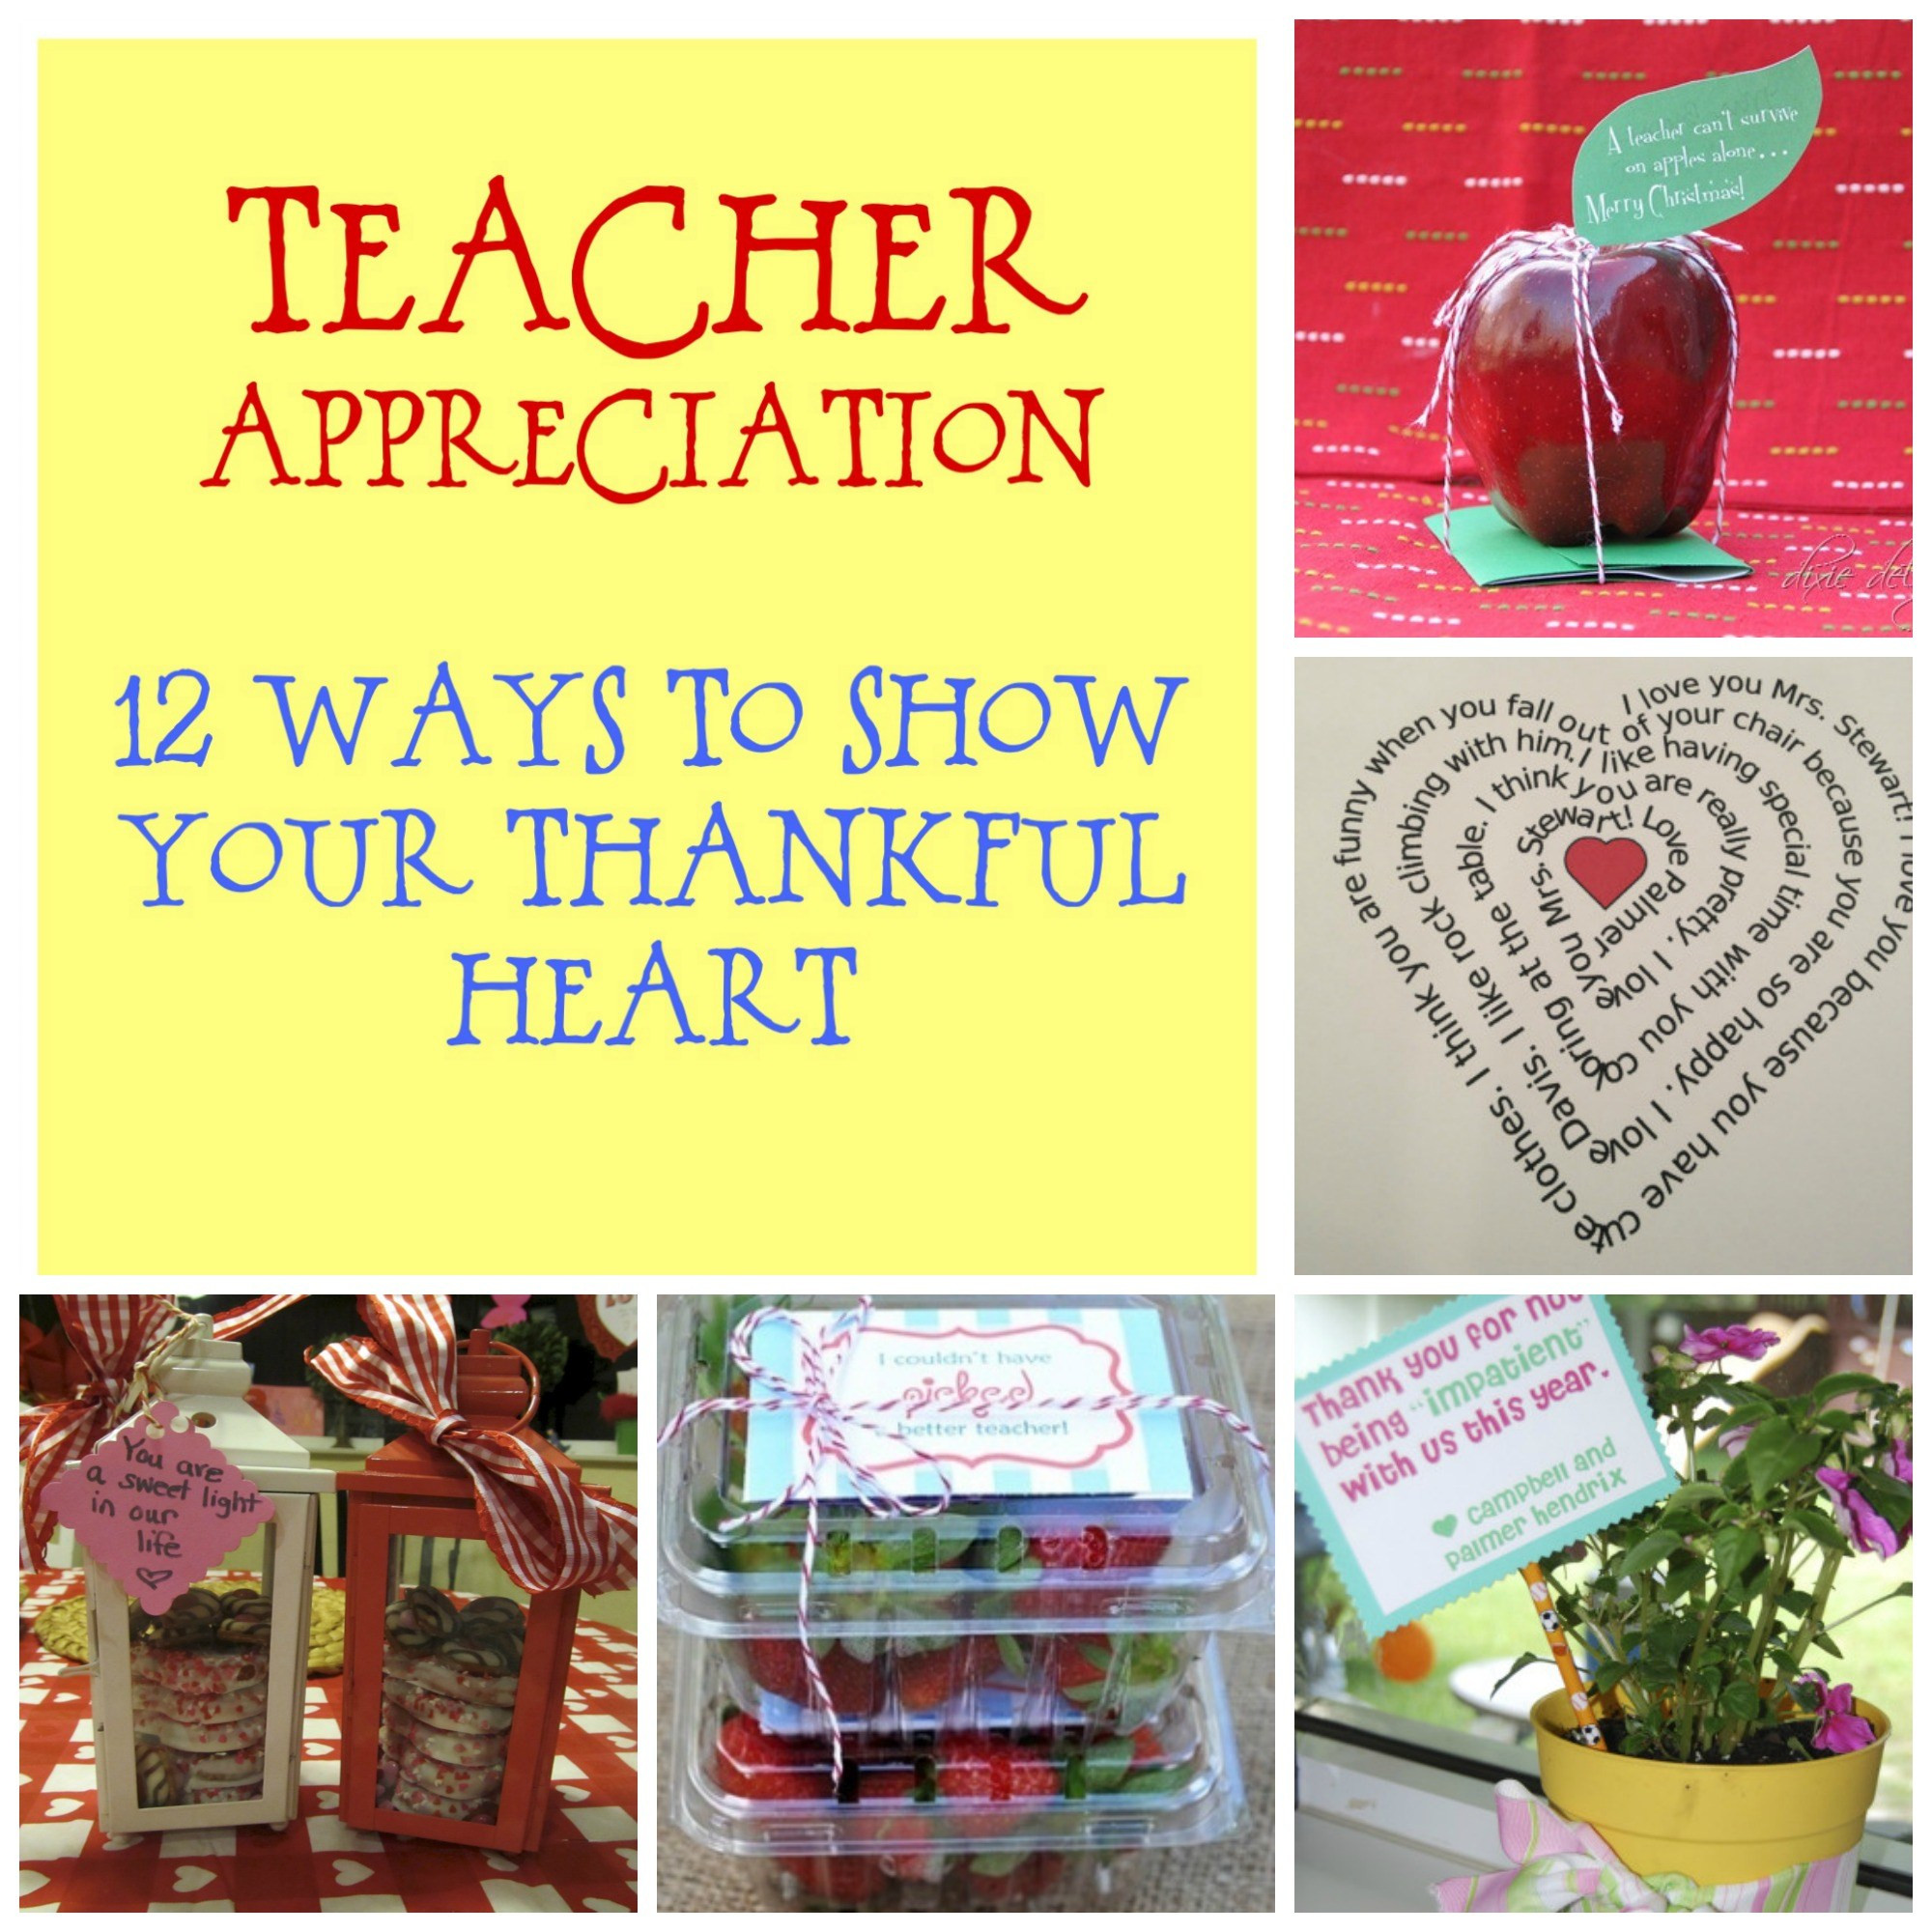 Teacher Appreciation Gifts DIY
 Teacher Appreciation ideas